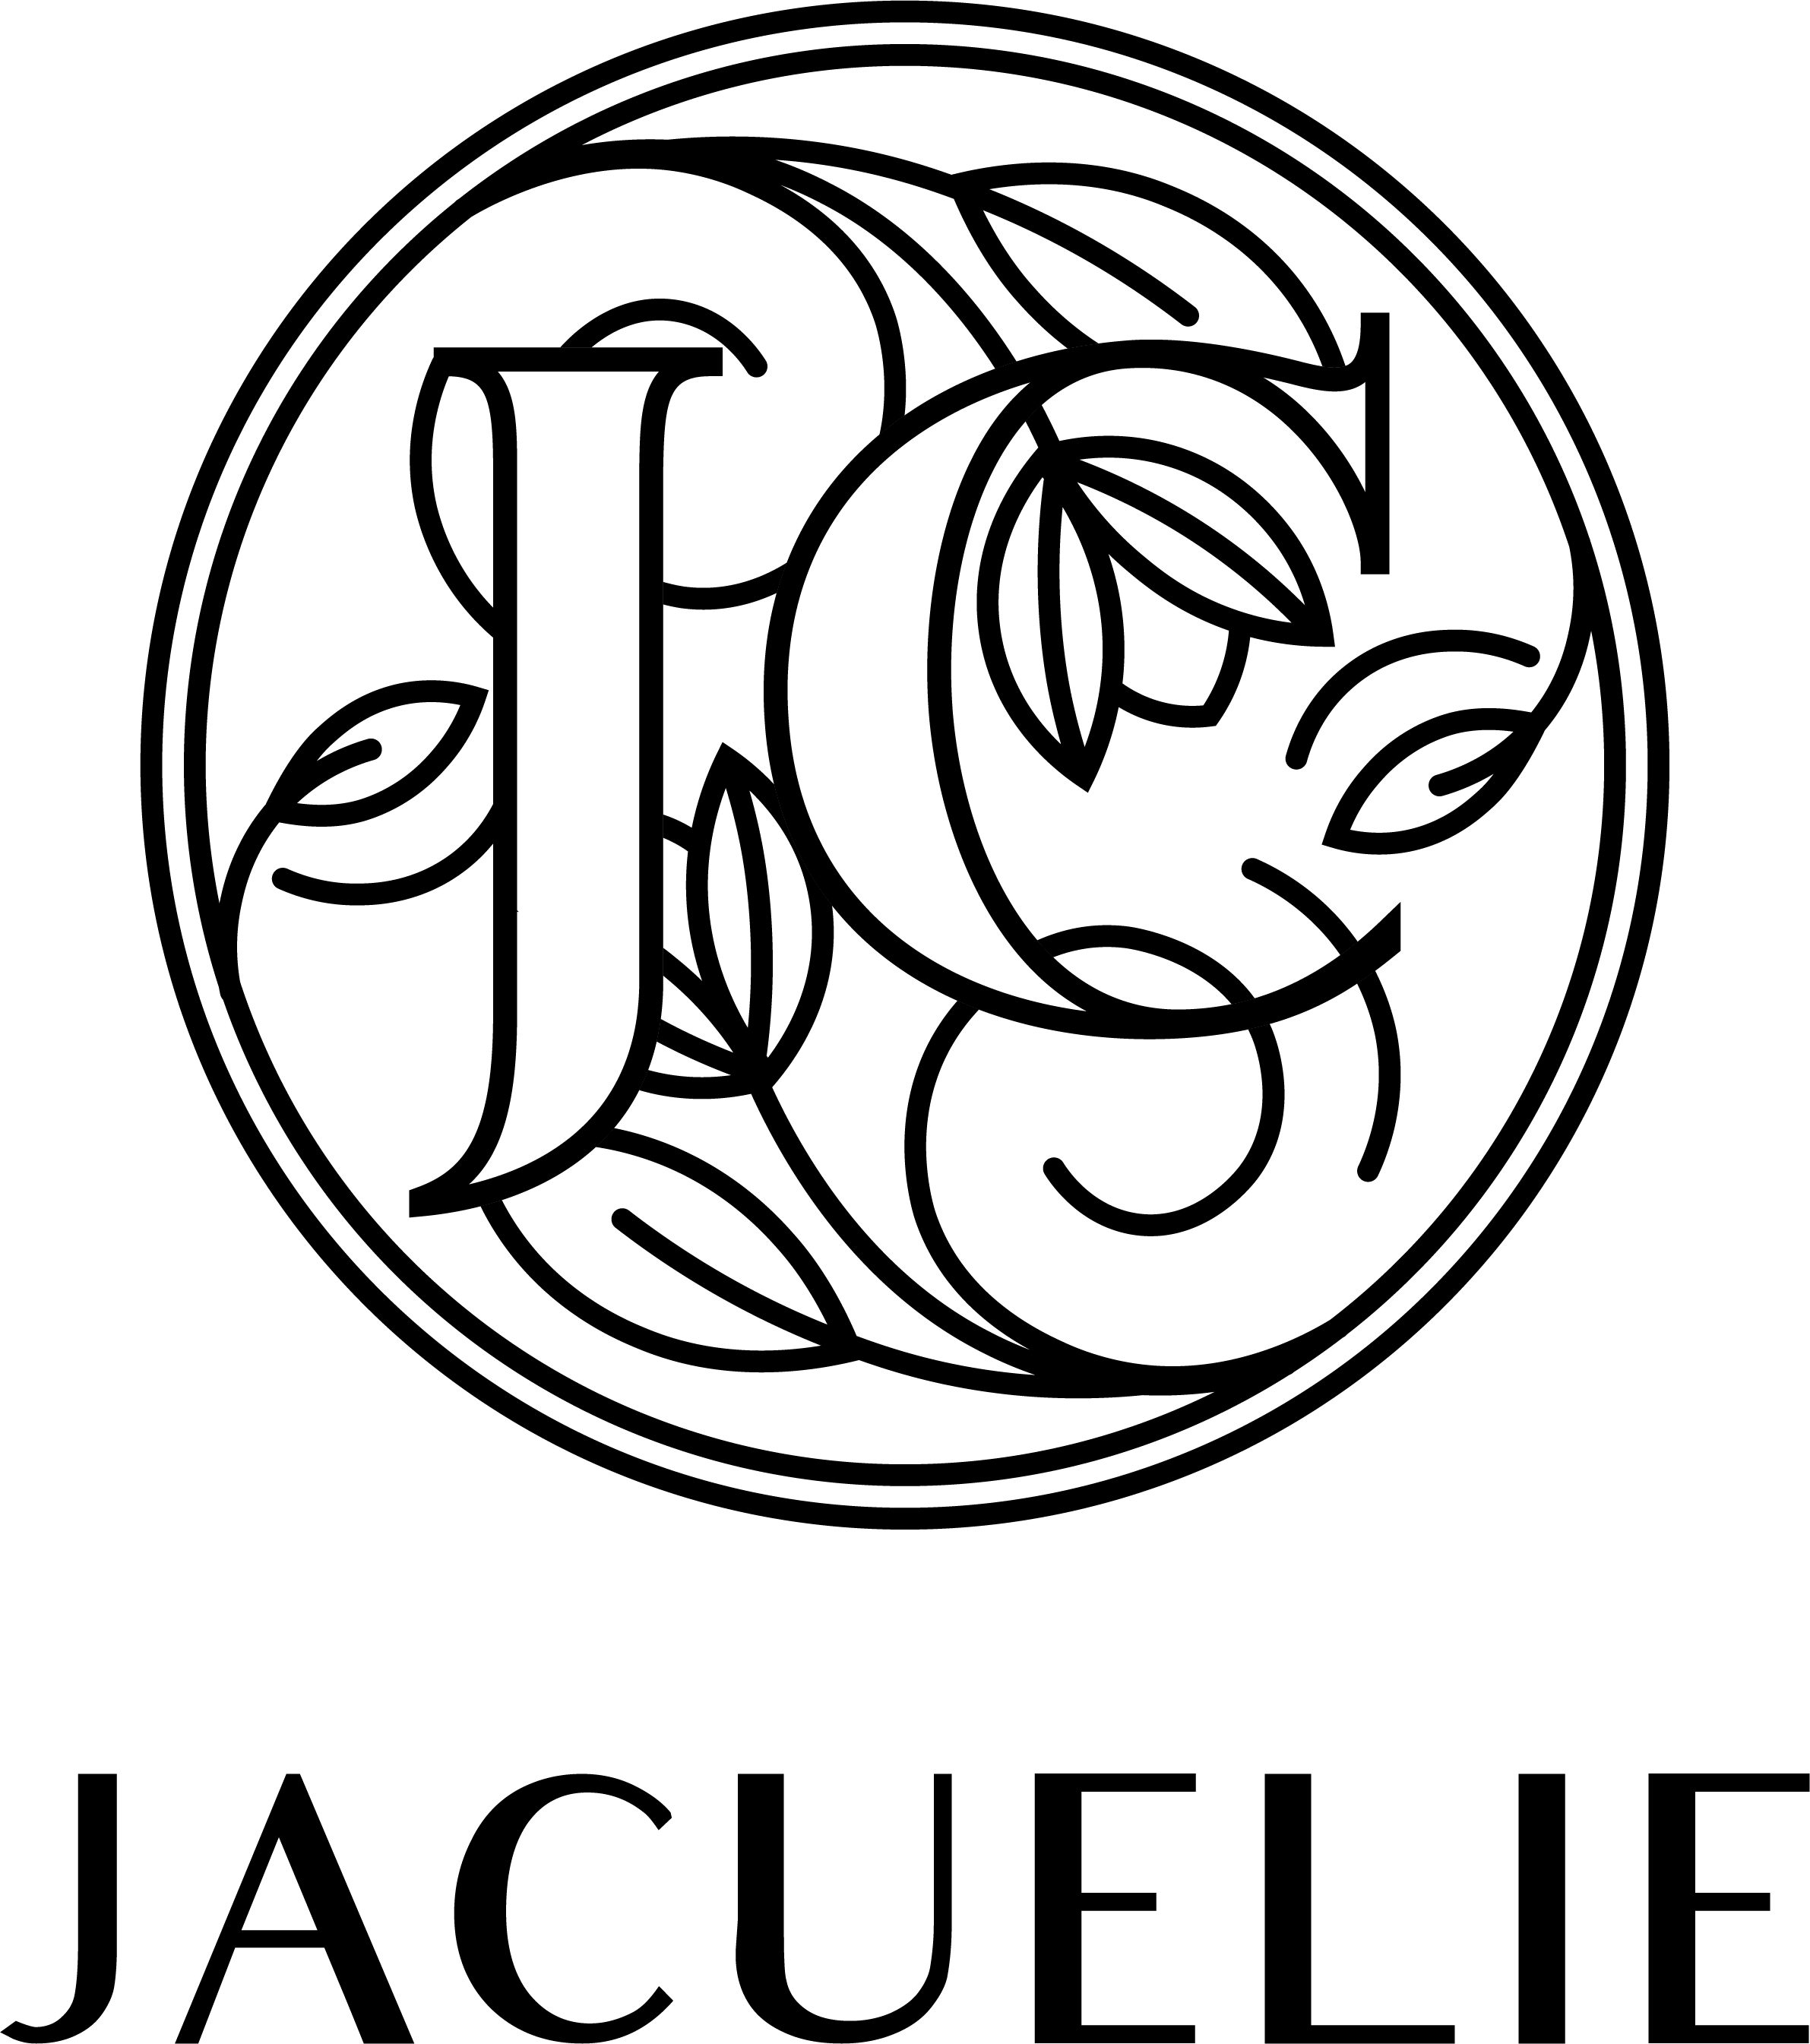 JACUELIE